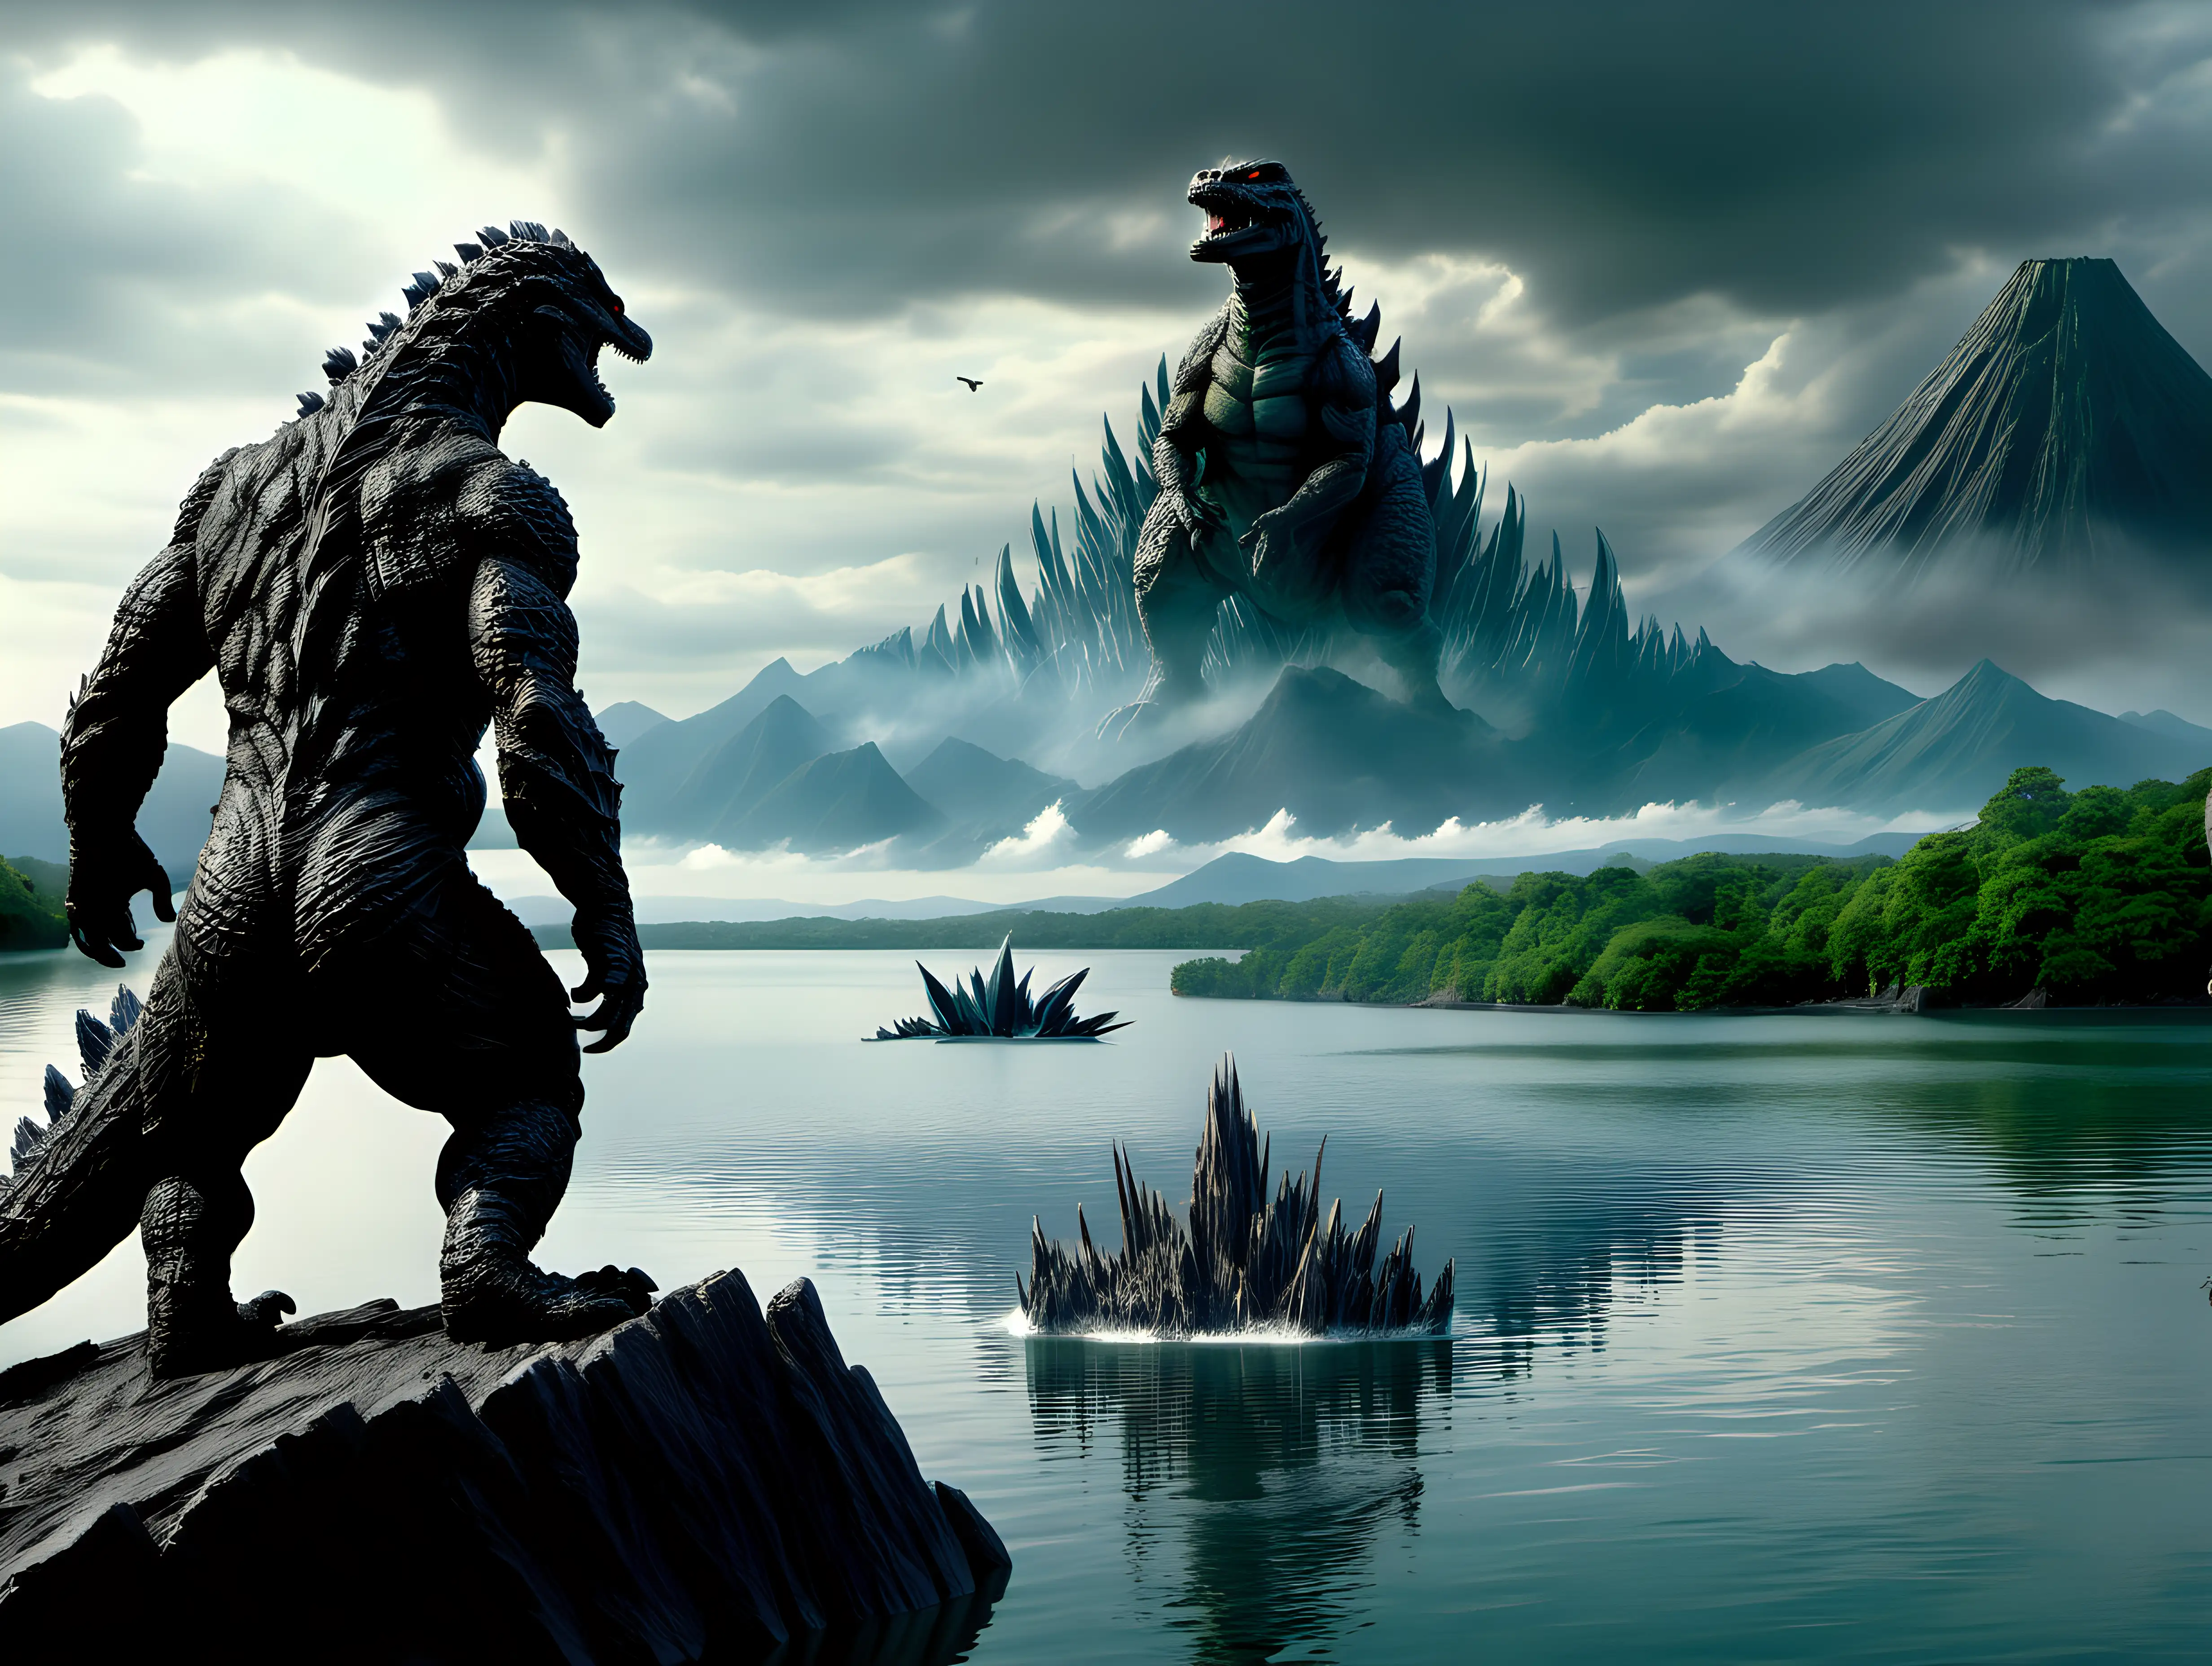 Majestic Godzilla Gazes at DinosaurInhabited Island Across Tranquil Lake